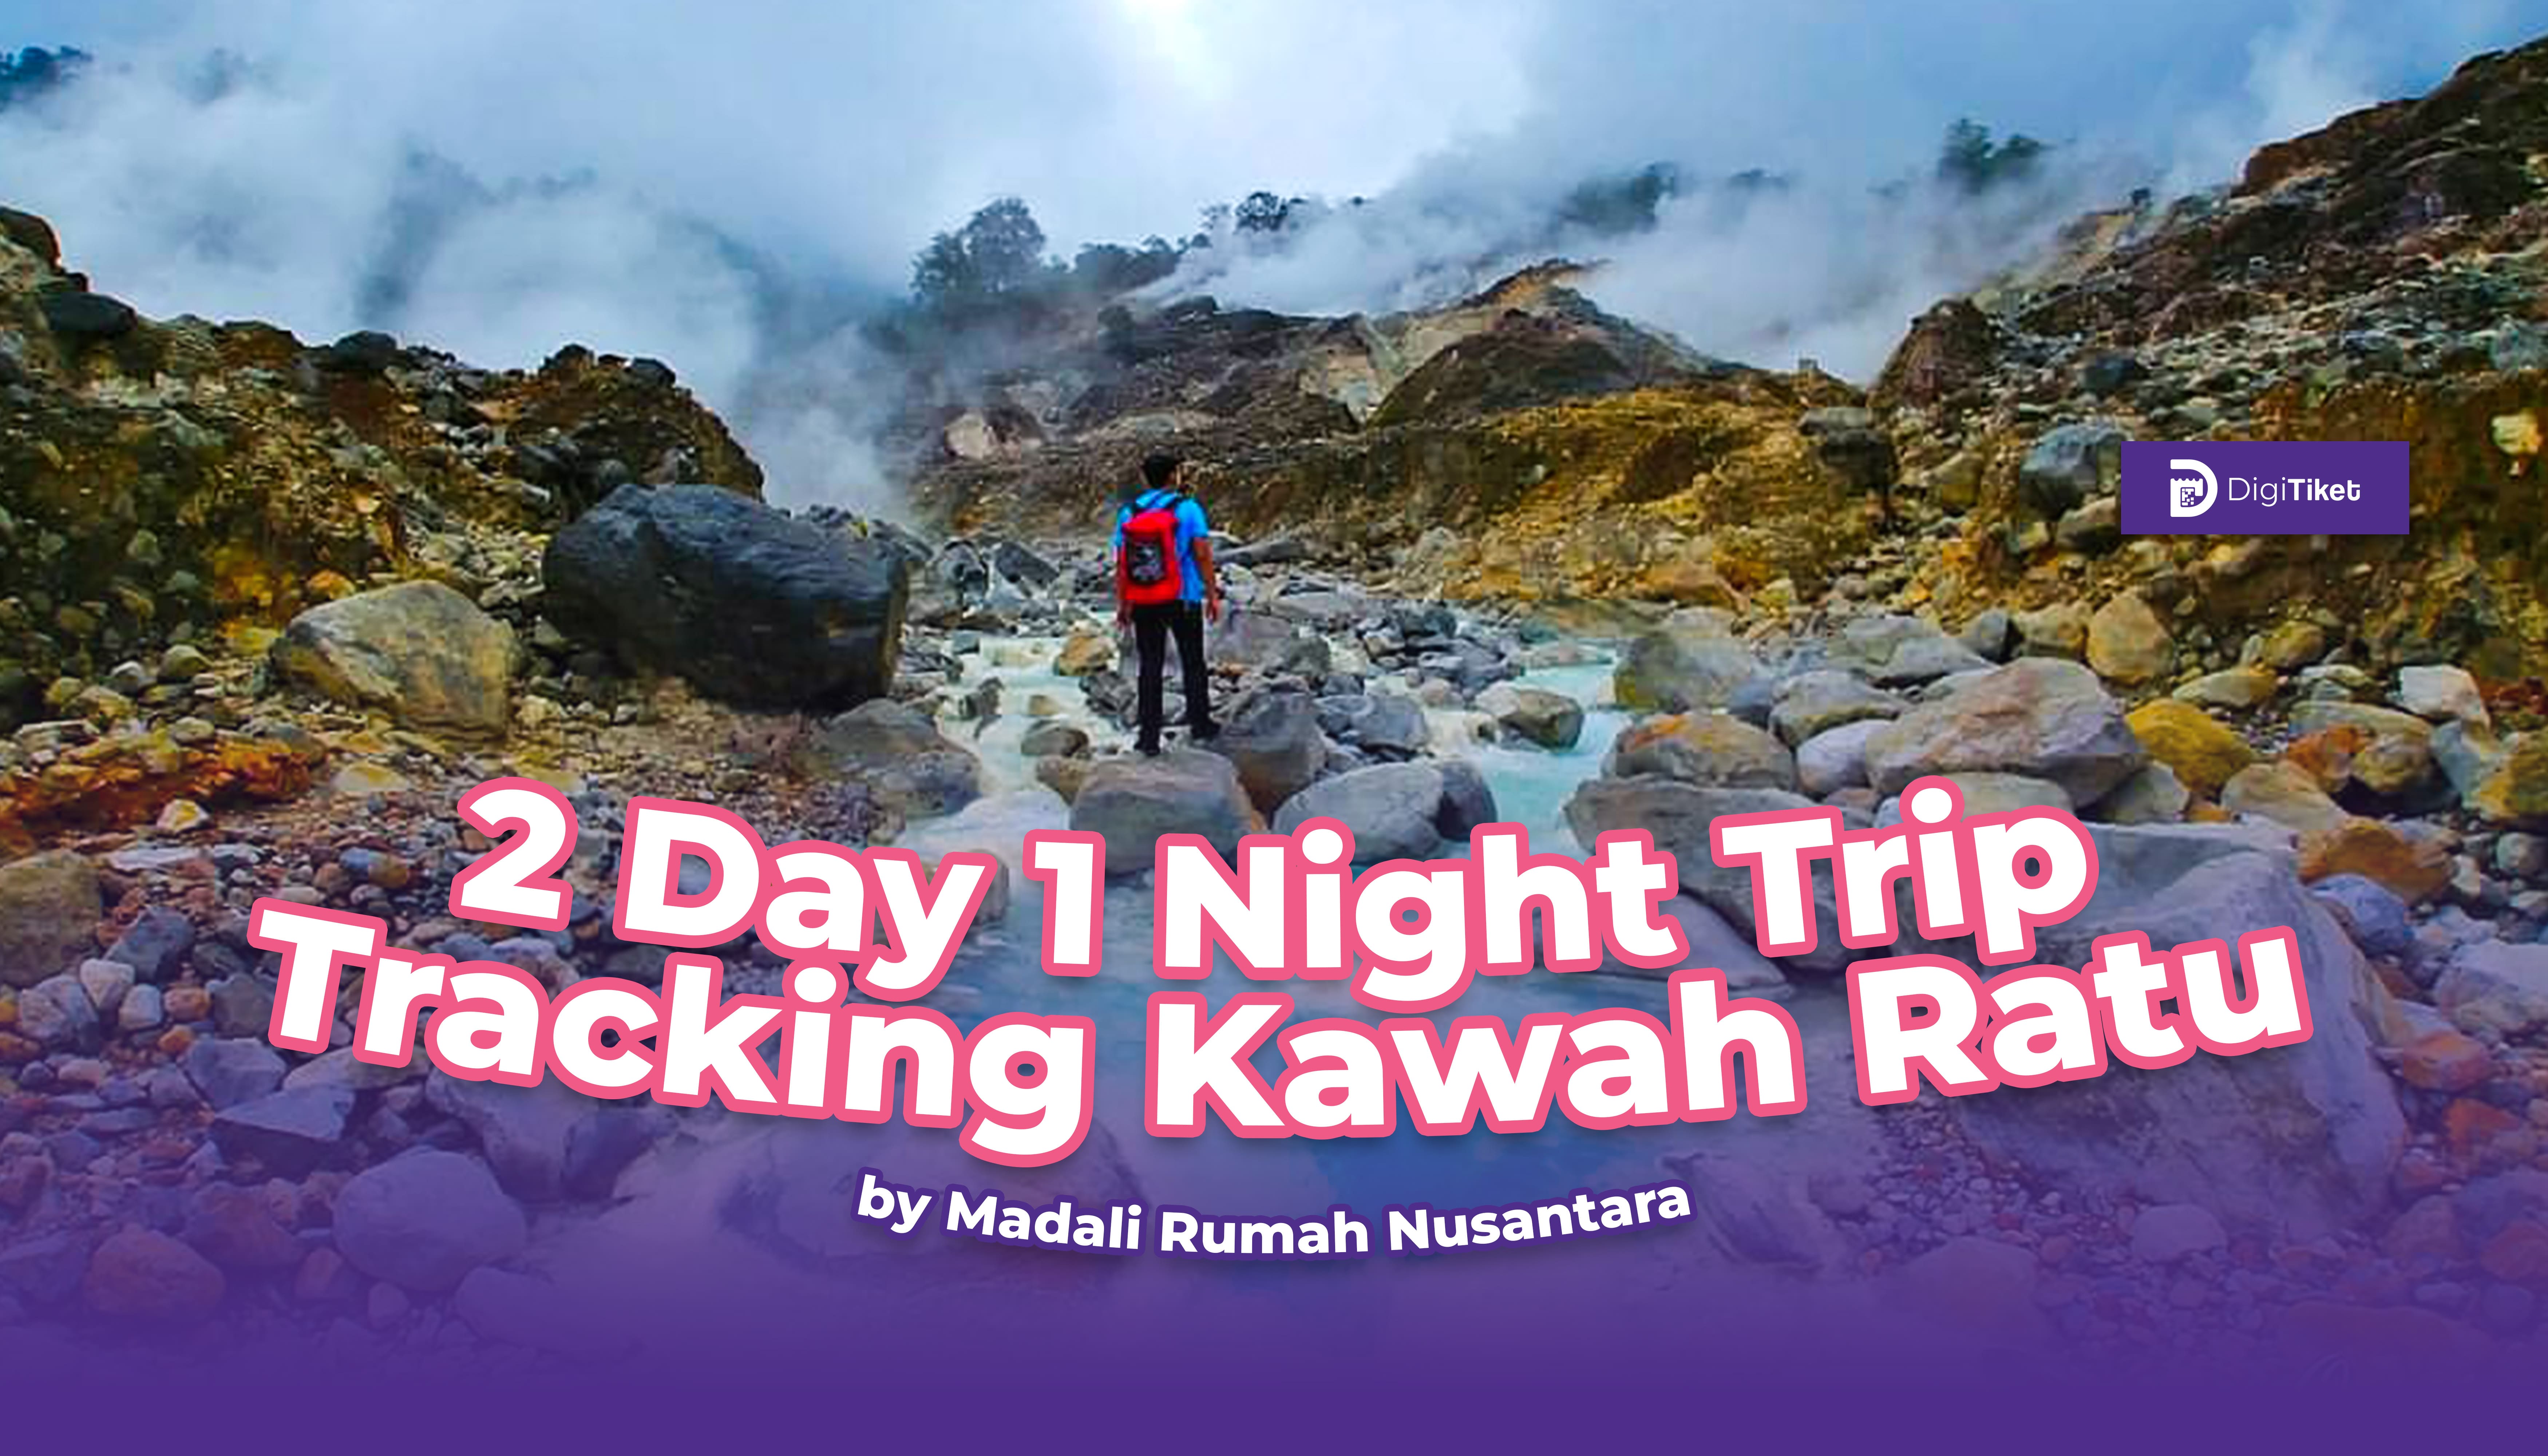 2 Day 1 Night Trip Tracking Kawah Ratu by Madali Rumah Nusantara